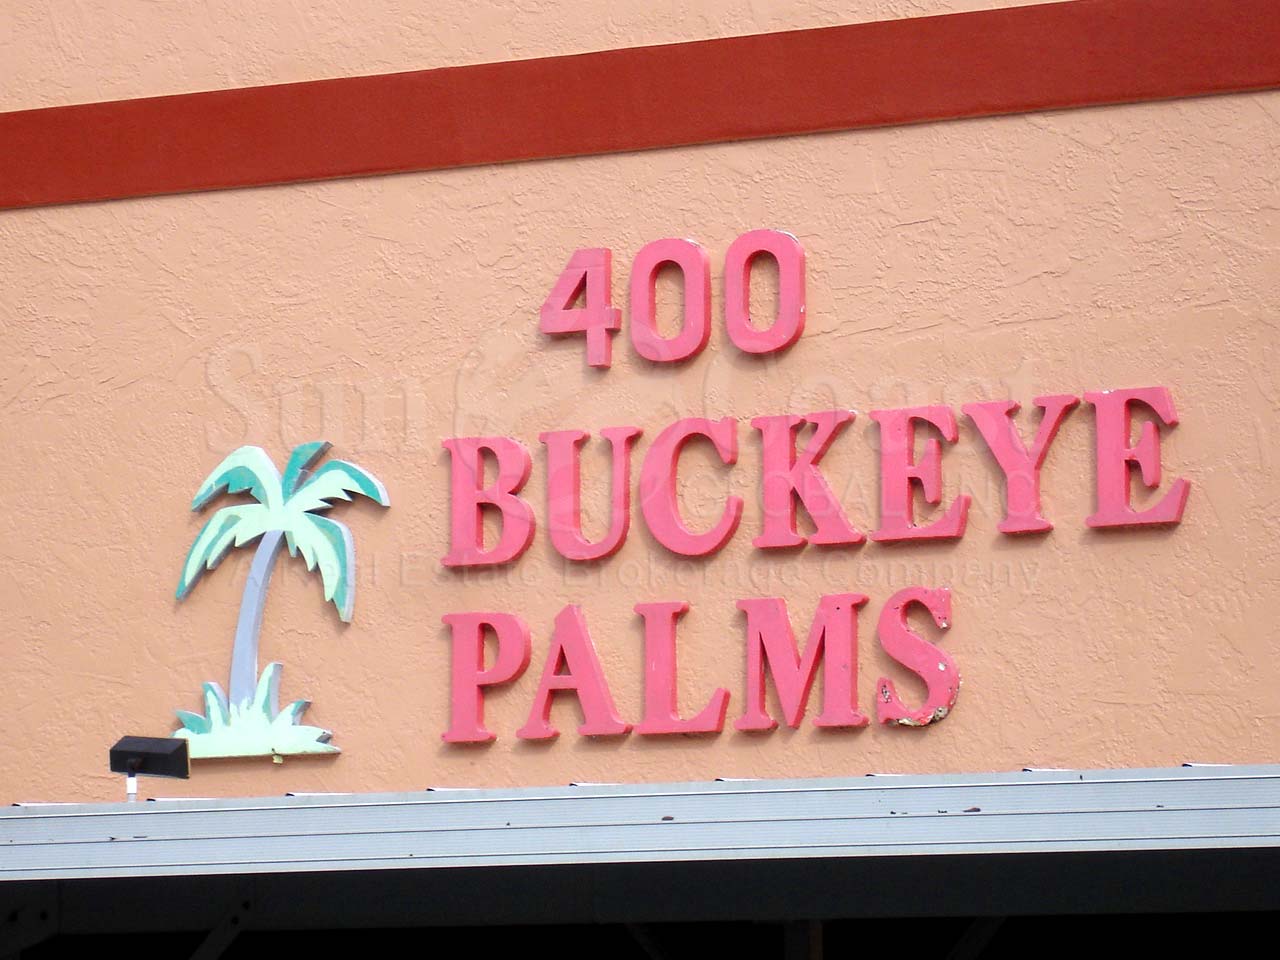 Buckeye Palms Signage